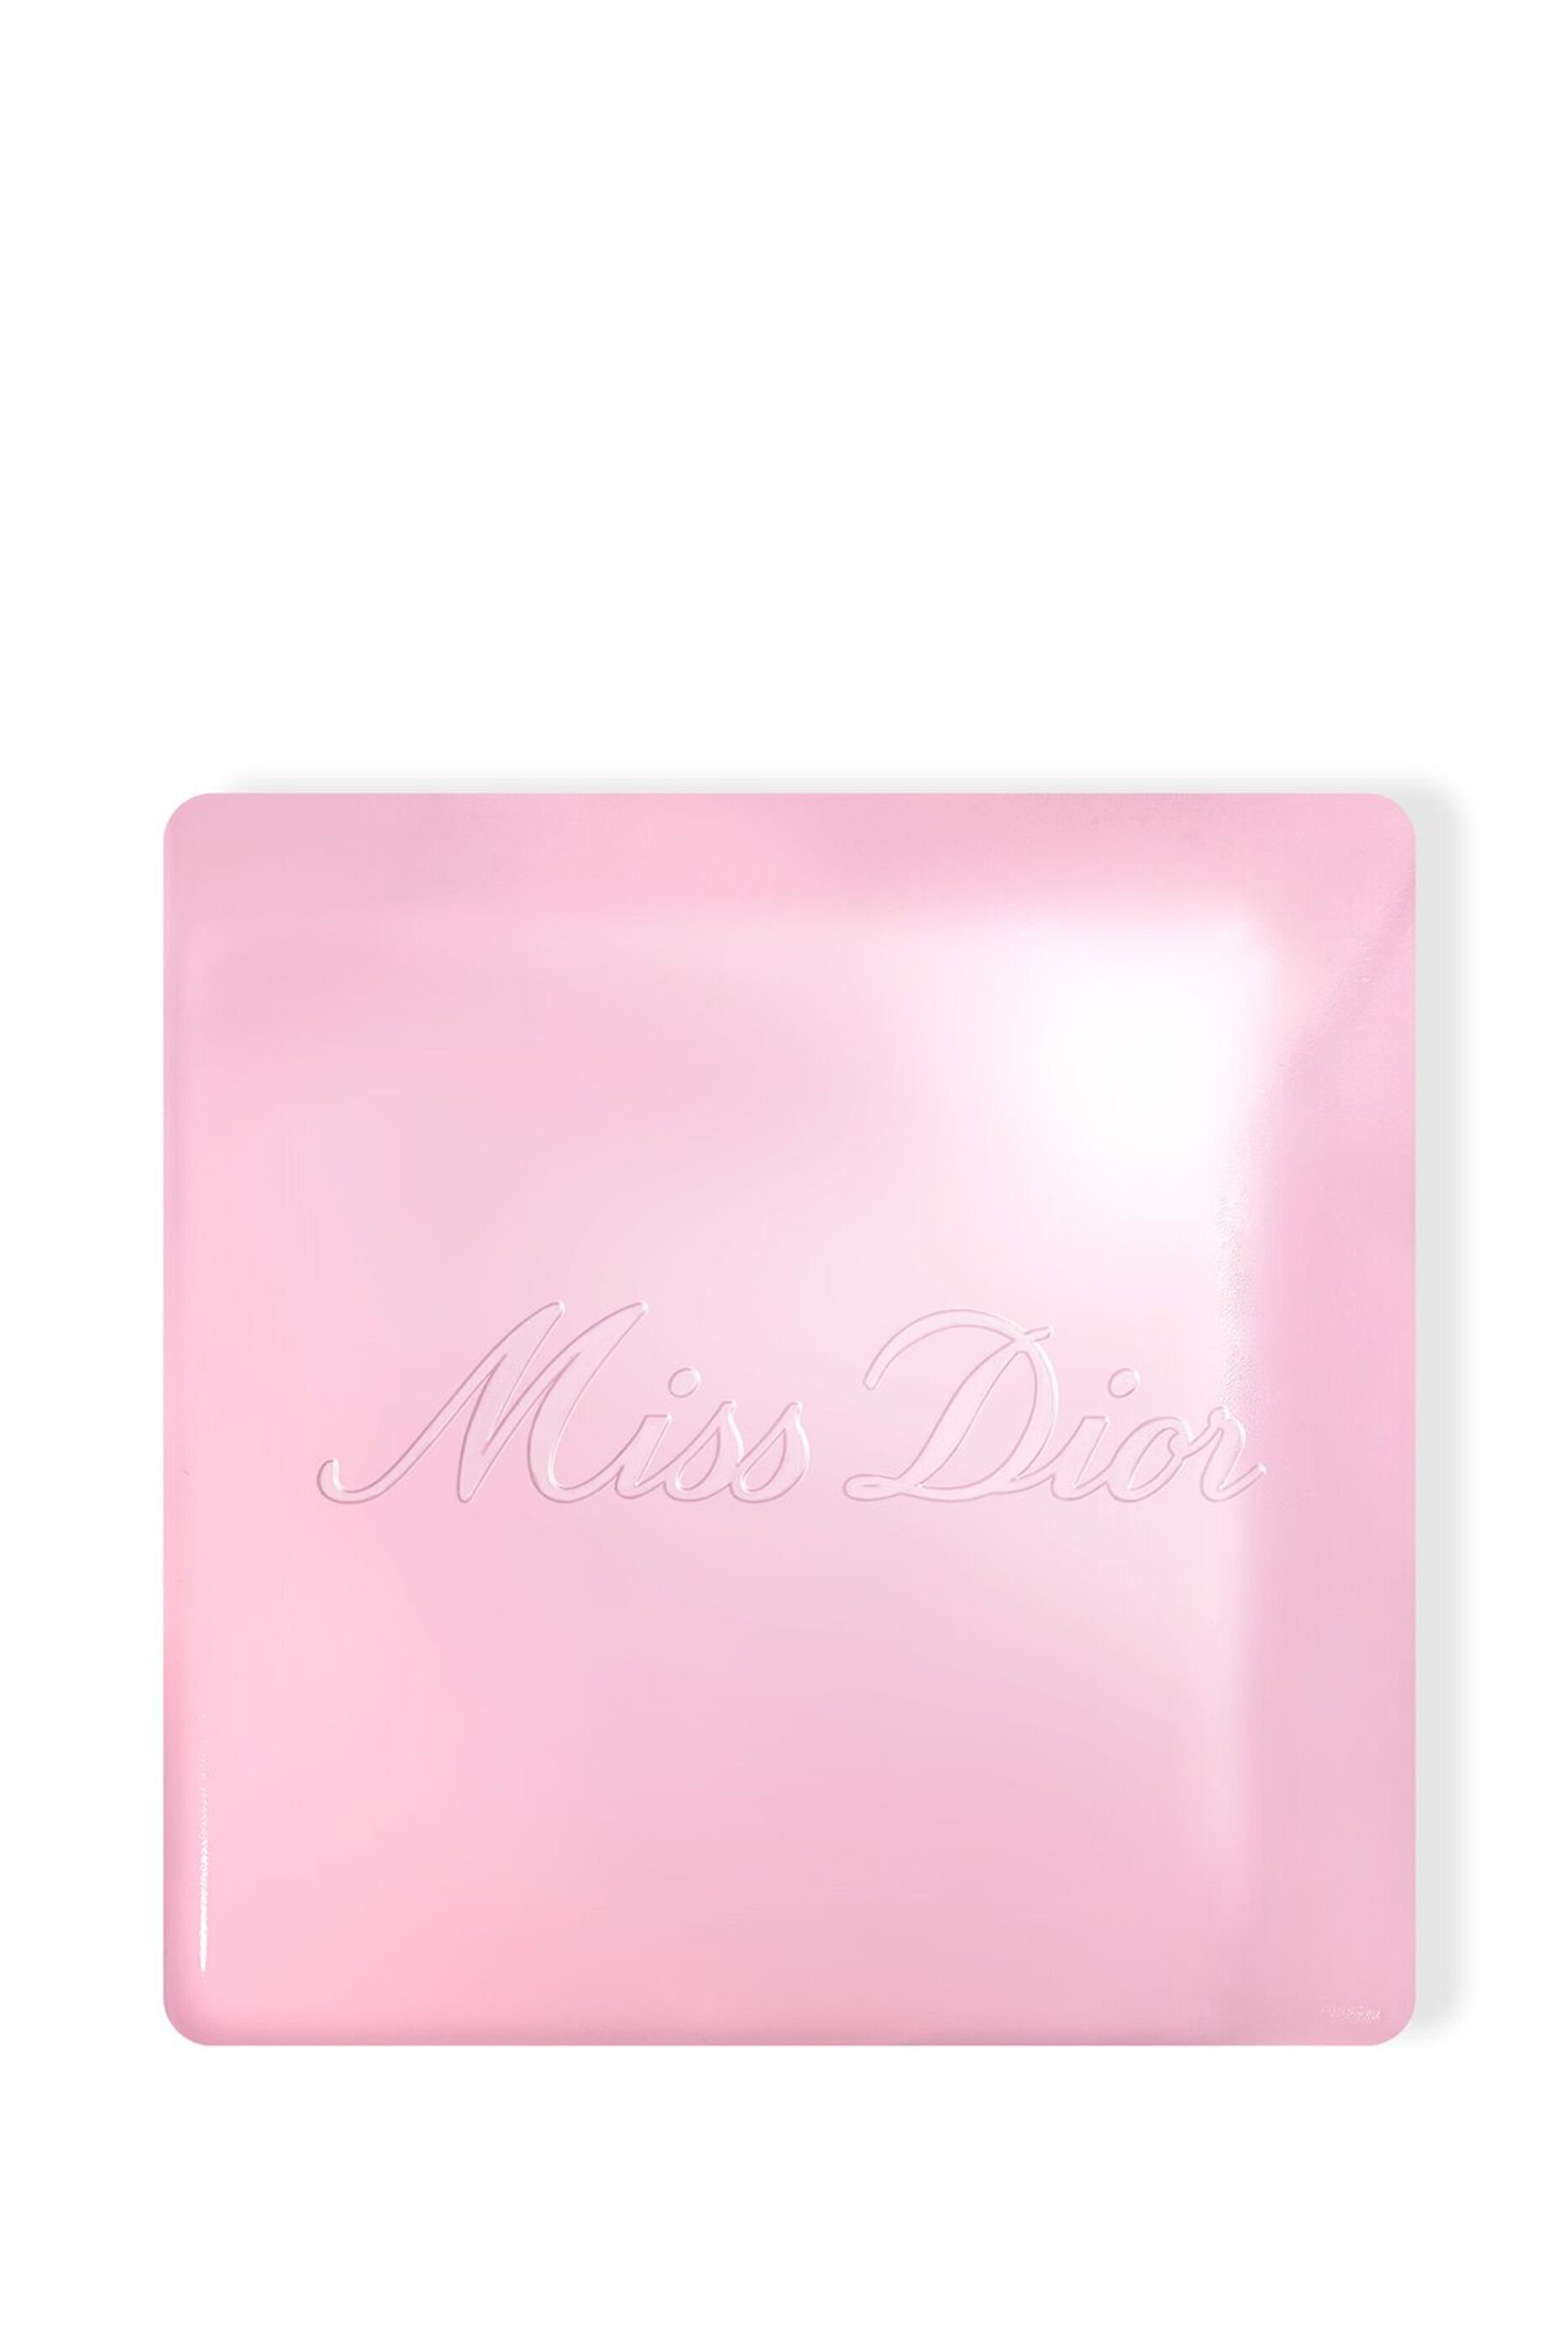 Christian Dior Body Bath Soap Le Savon Collector Gift item for Customers  NWB  eBay